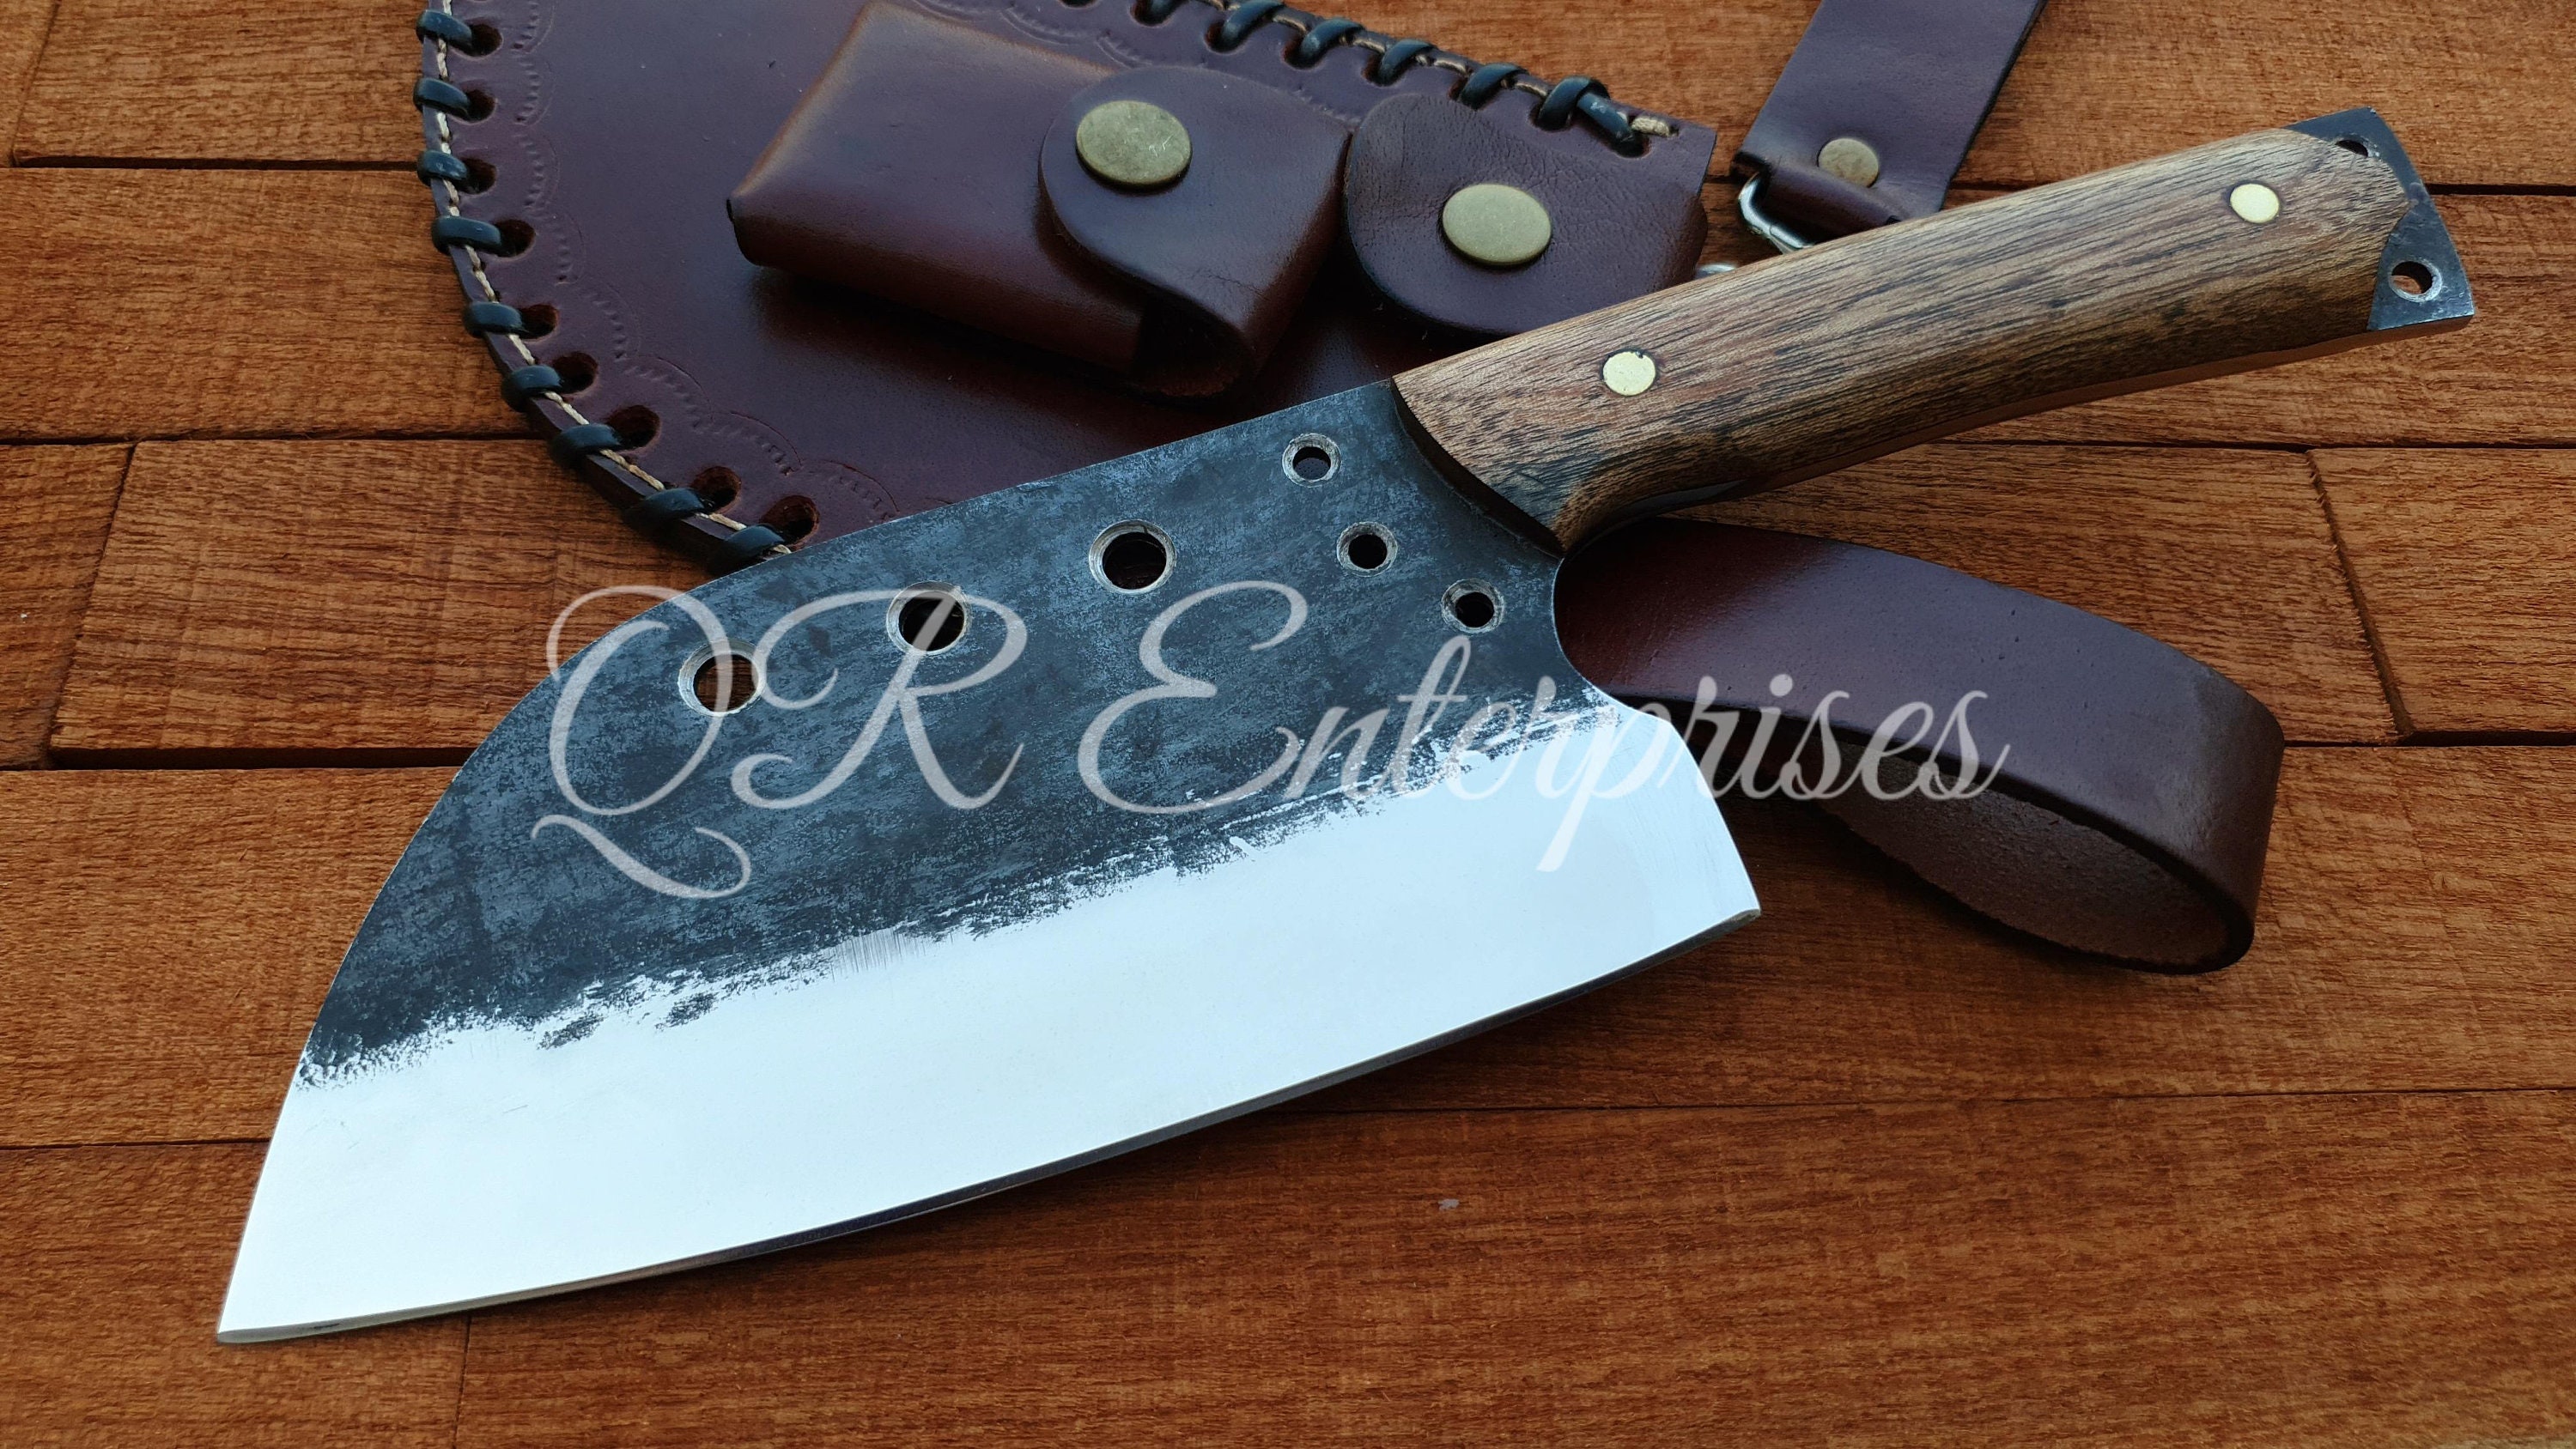 Handmade Damascus Cleaver Chopper Serbian chef knife kitchen knife fixed  blade Knife 11.5 Inches with sheath VK5518 